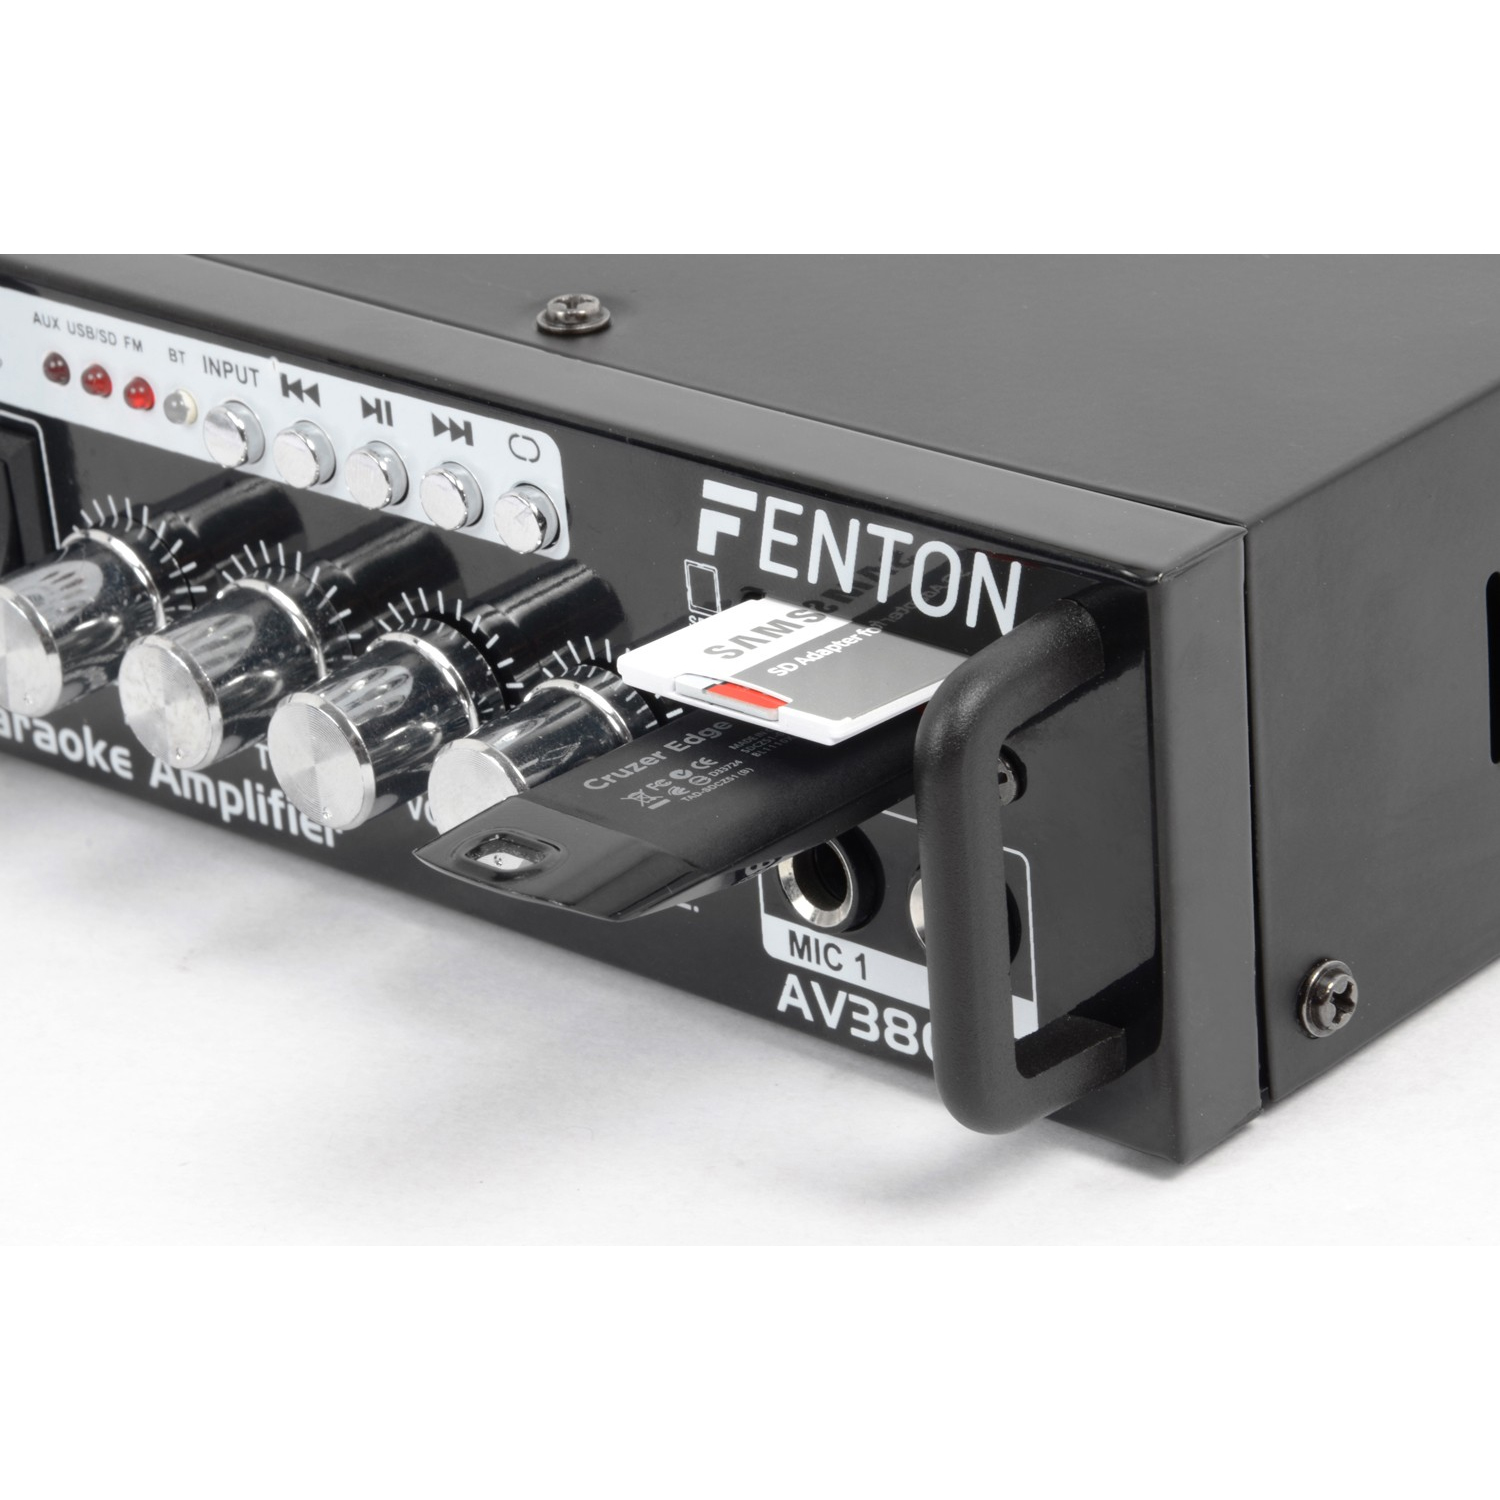 FENTON AV380BT Πλήρες Karaoke πακέτο με ενισχυτή USB/SD/MP3/FM/BT ηχεία και 2 μικρόφωνα 103.145